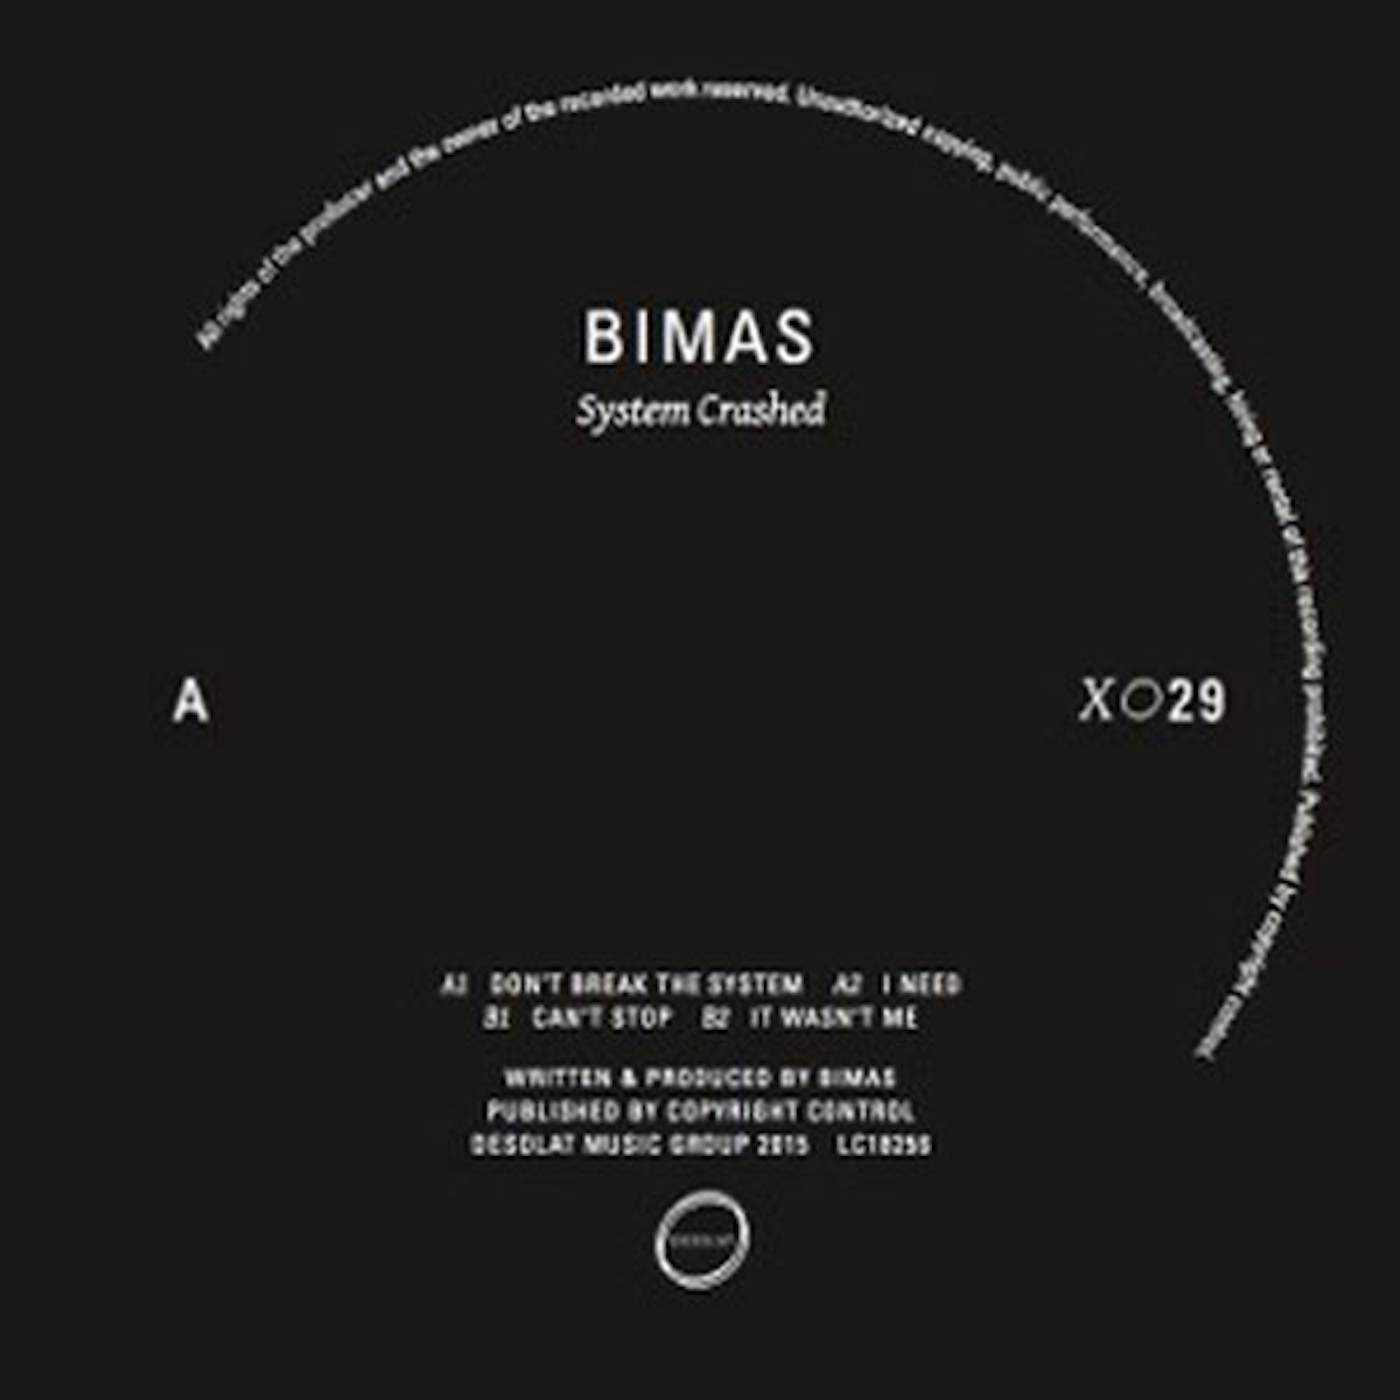 Bimas System Crashed Vinyl Record